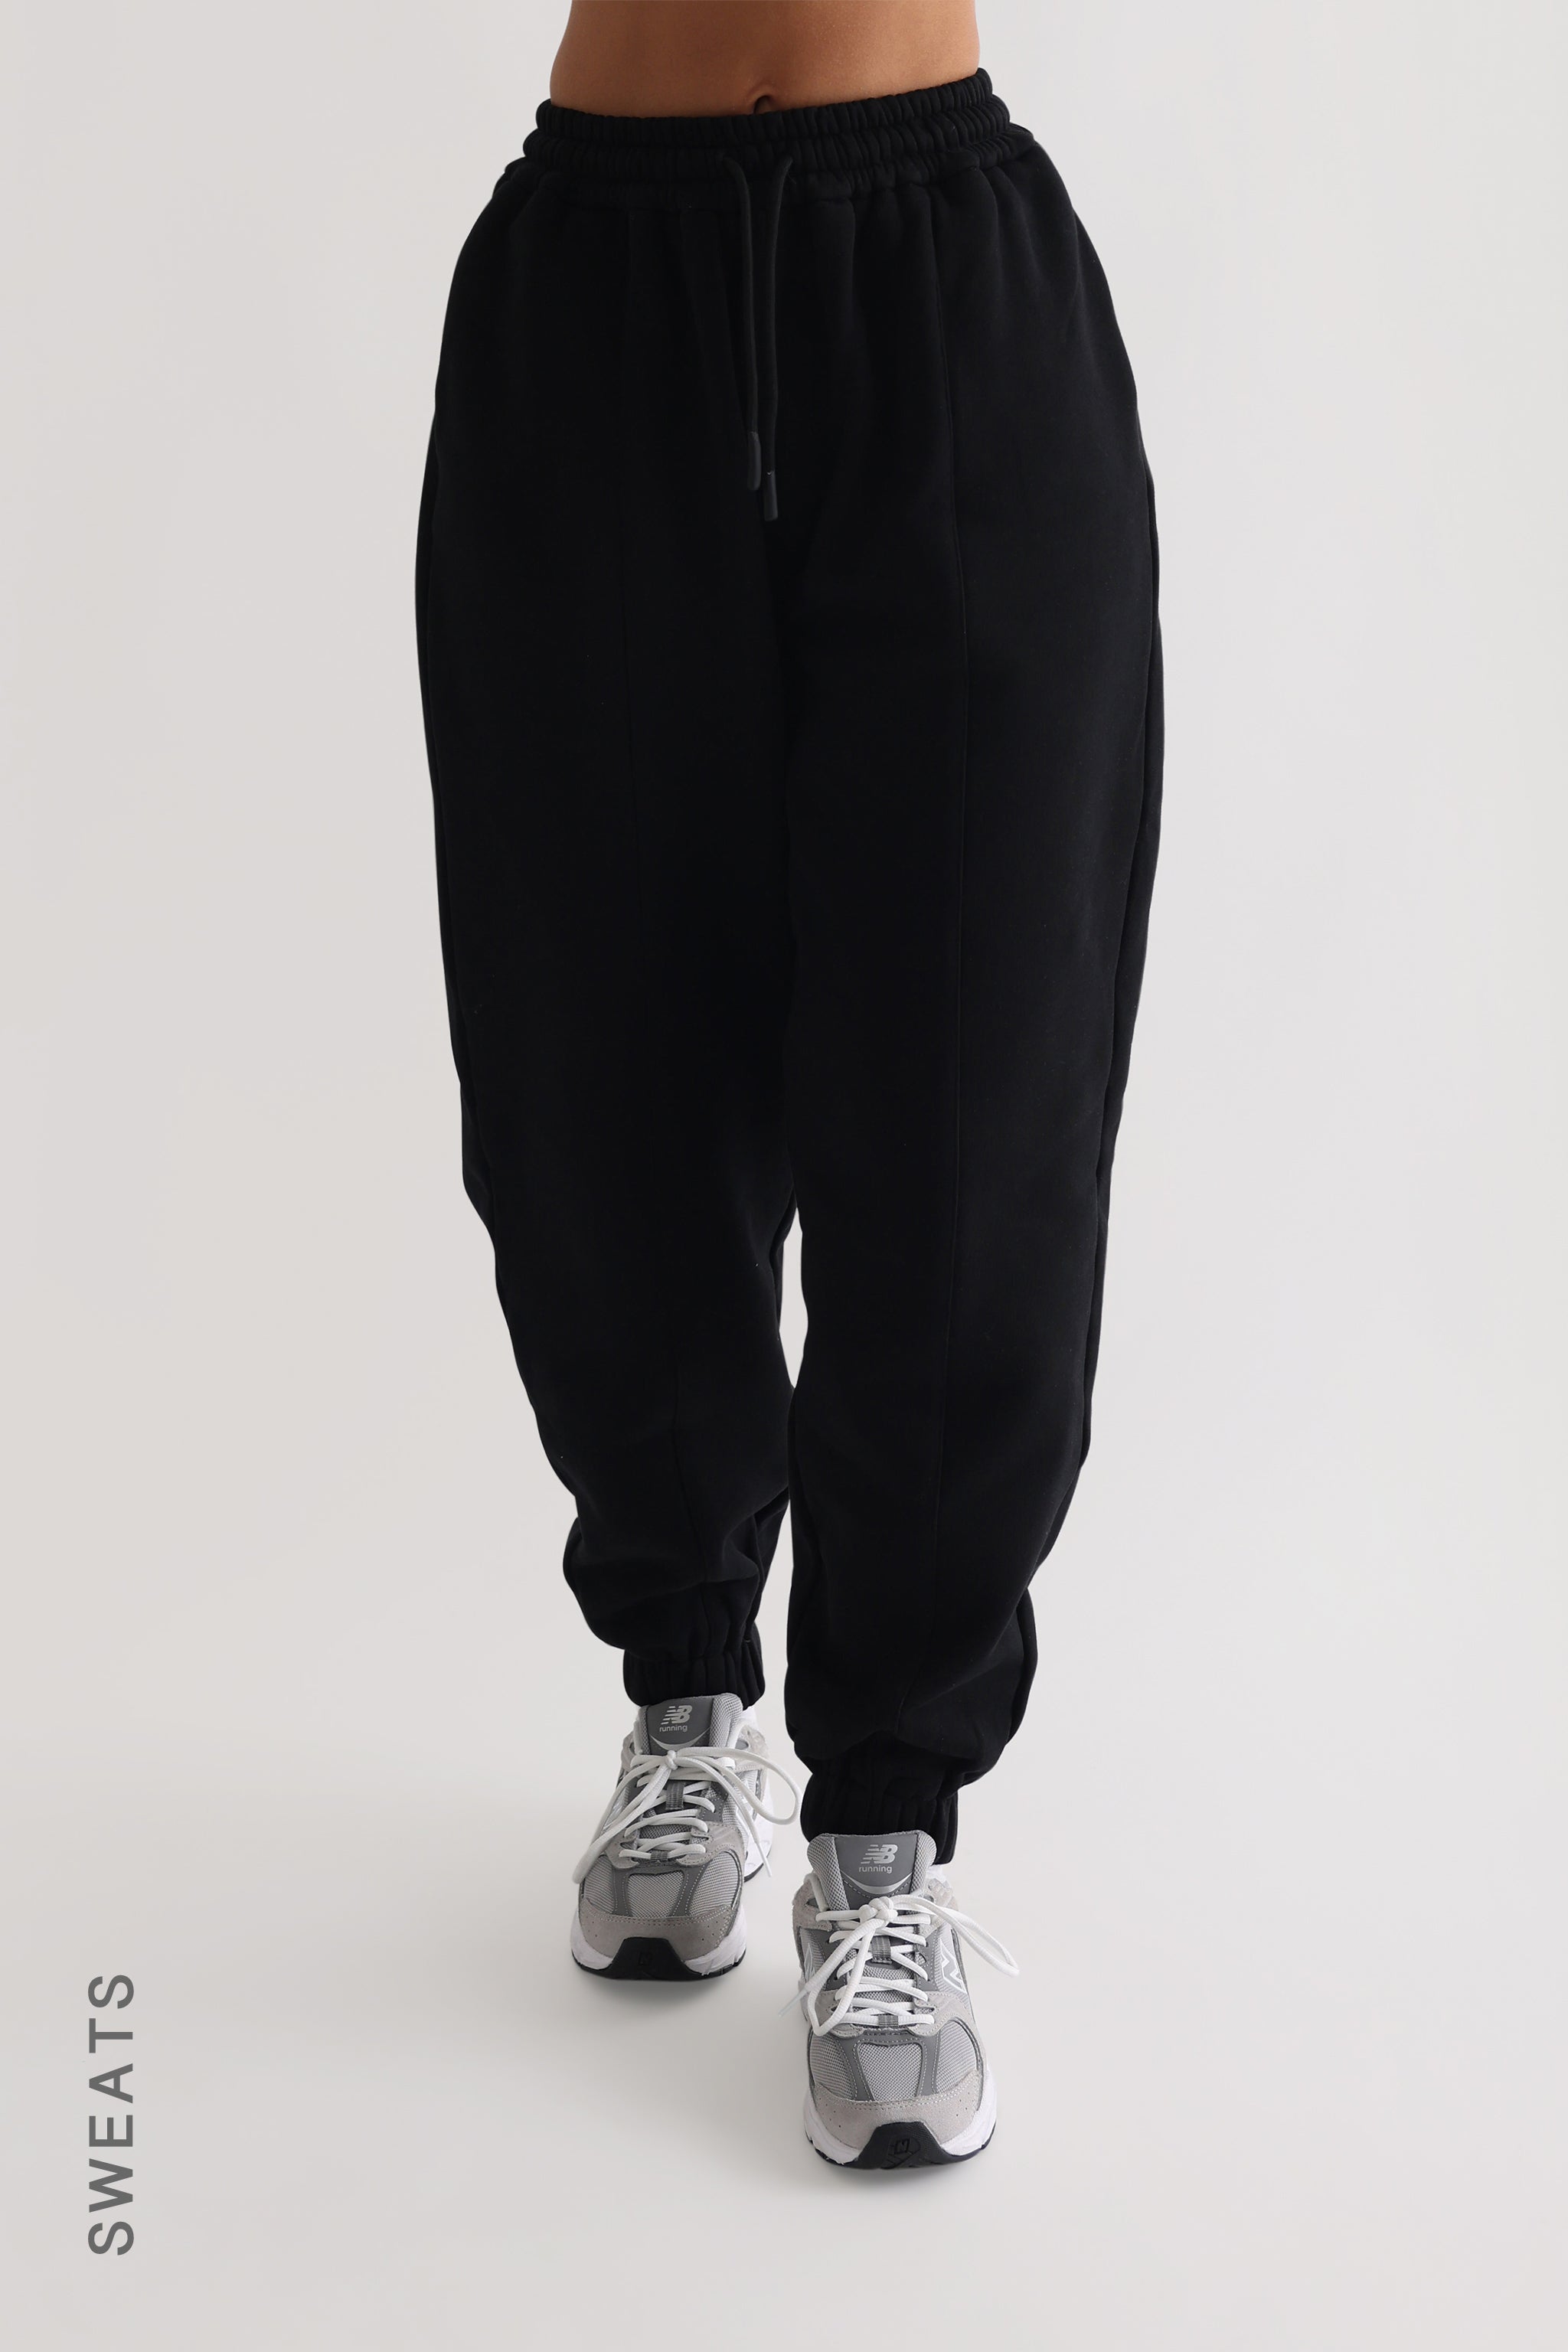 NWT VETEMENTS Black Washed Effect Sweatpants Size L $900